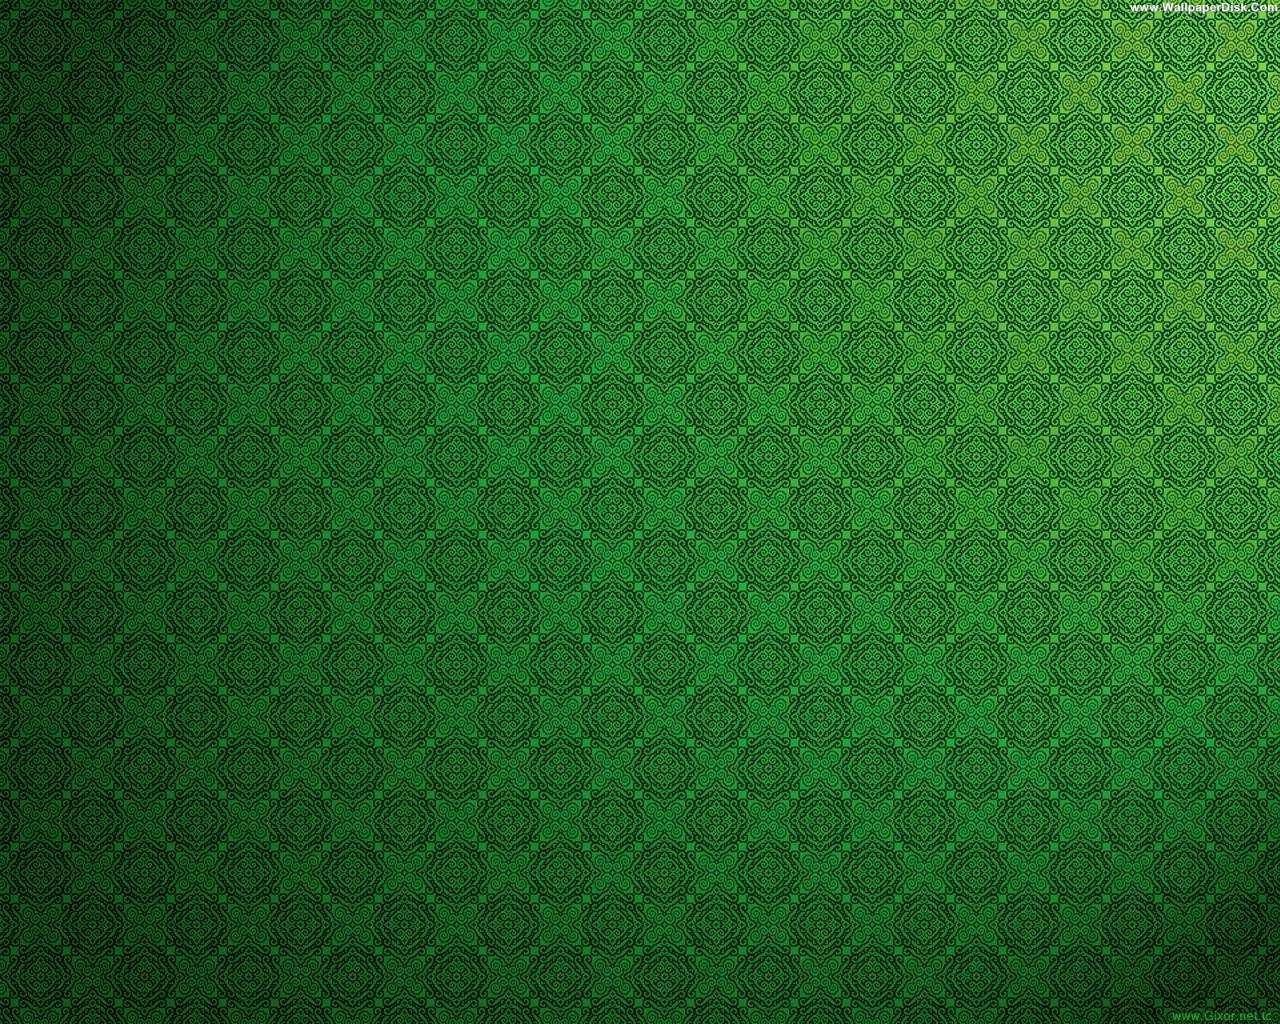 Islamic Wallpaper Desktop background HD Wallpaper & Background